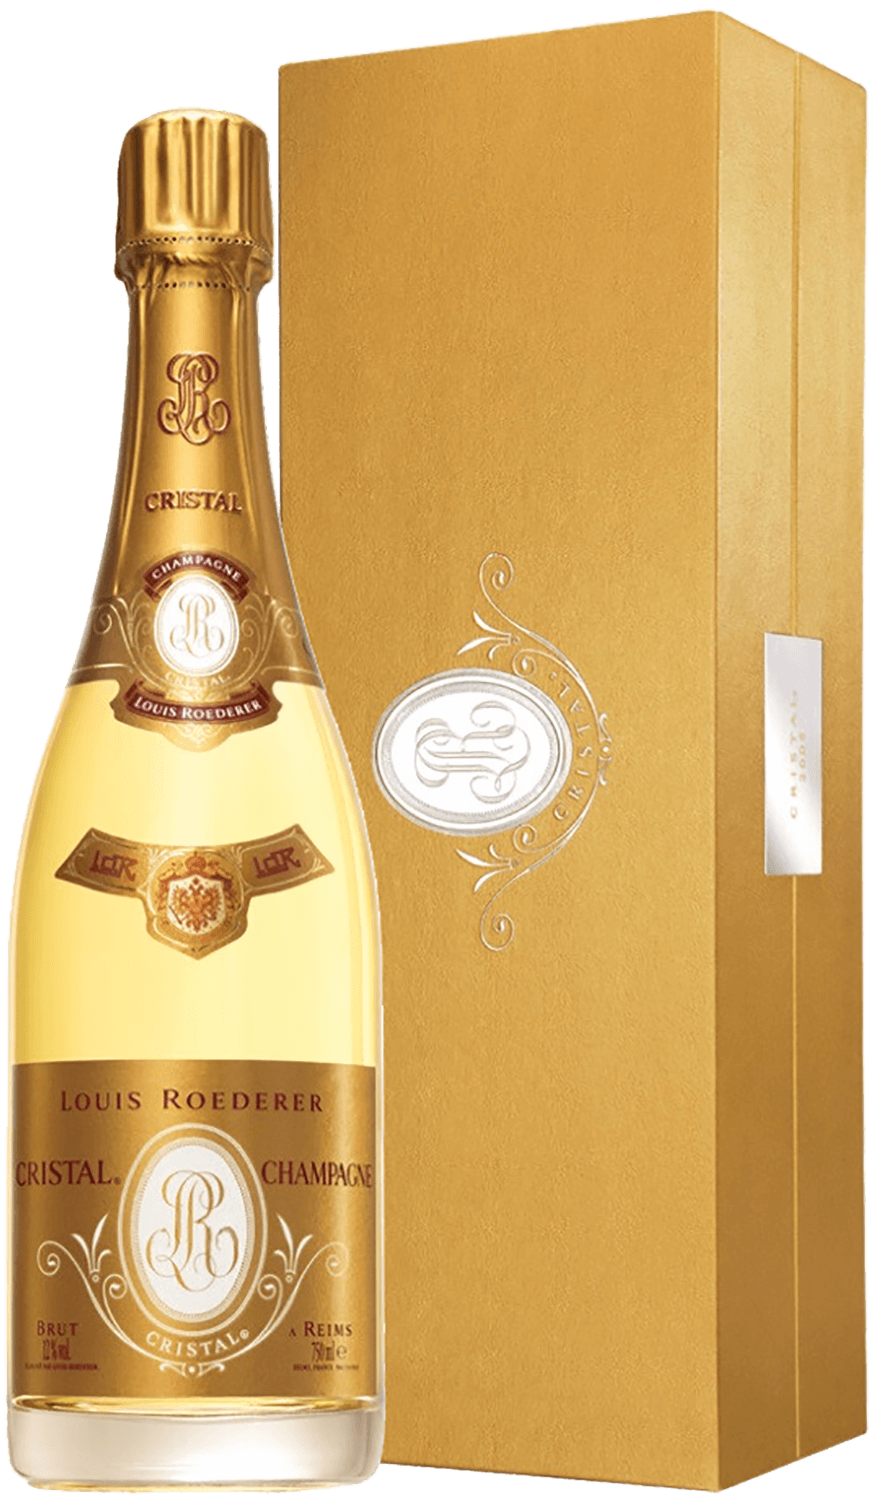 Cristal Brut Champagne AOC Louis Roederer (gift box) brut premiere champagne aoc louis roederer